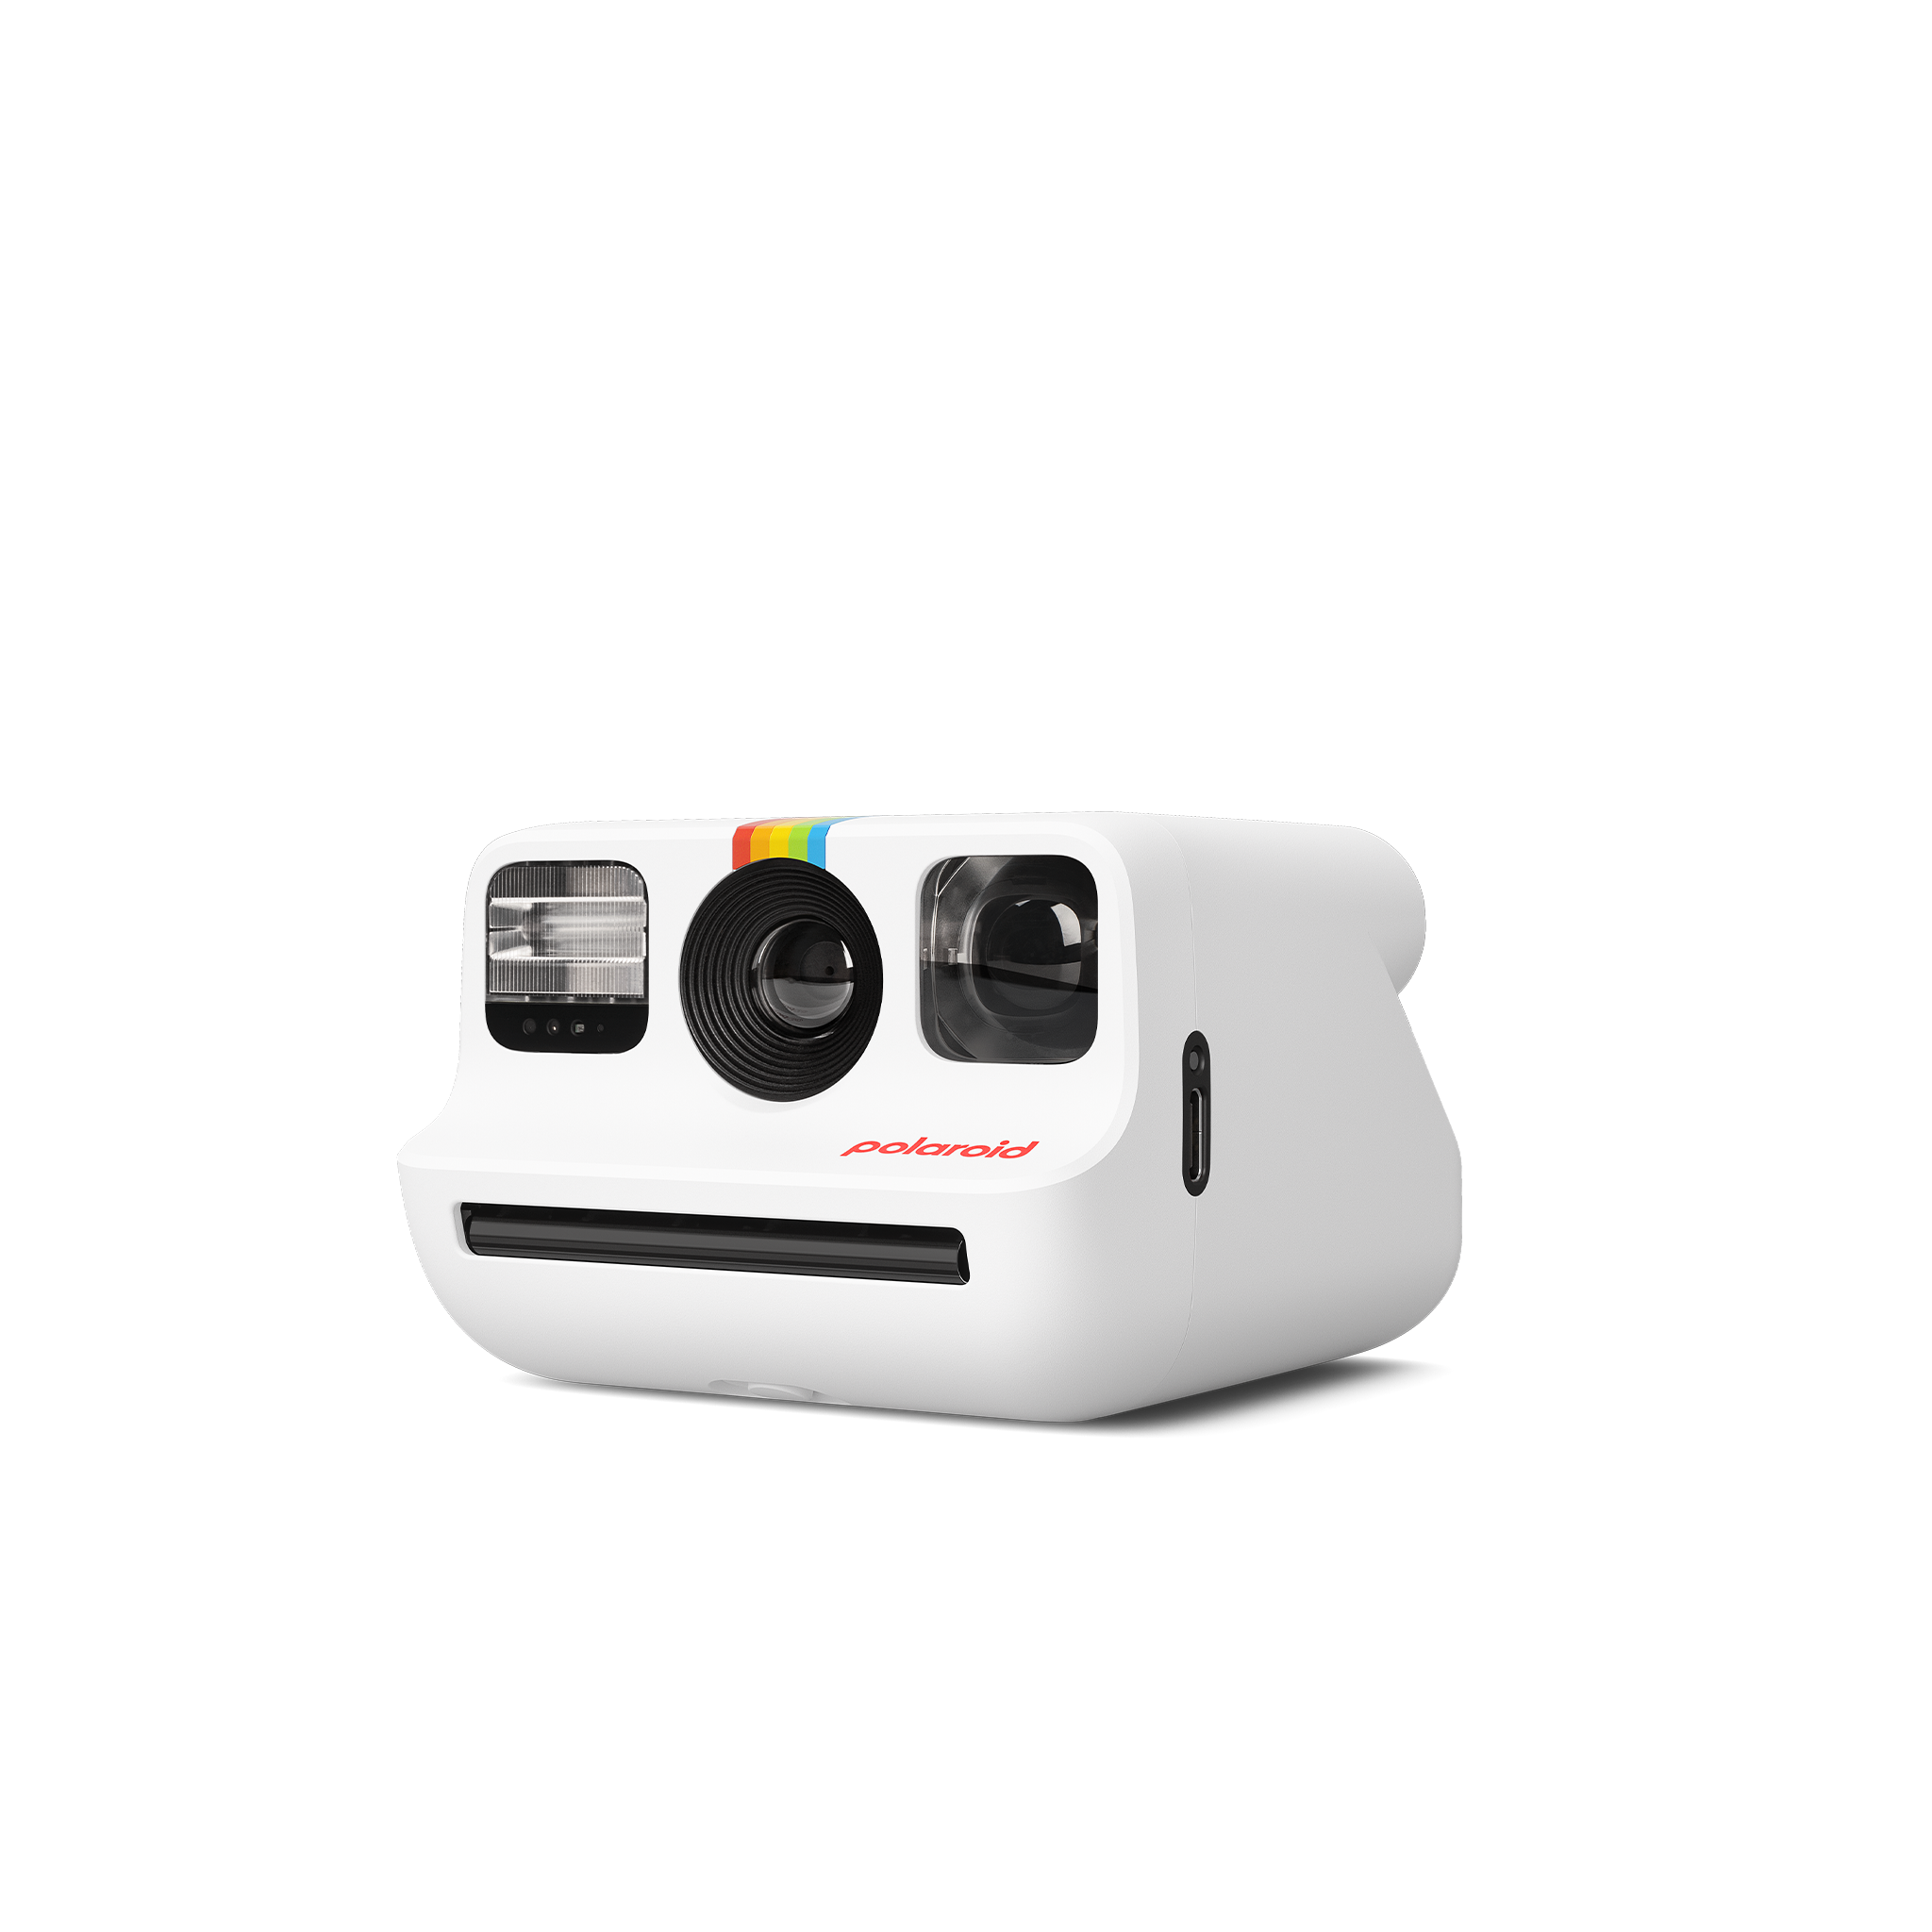 Polaroid Instant Cameras | Official Polaroid Online Store EU